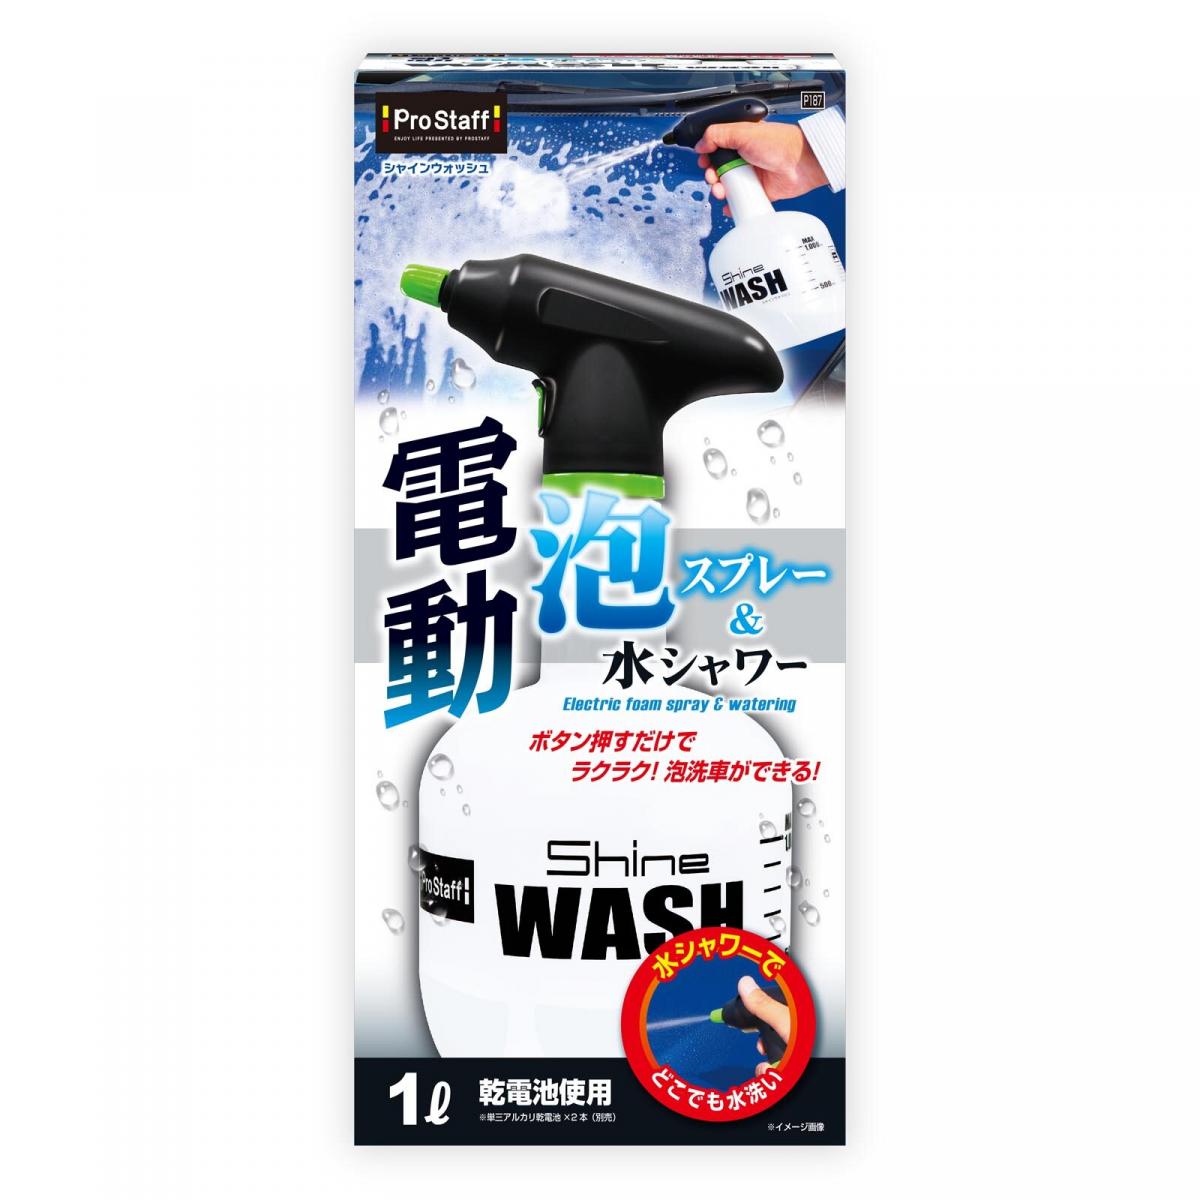 Portable Electric Spray "Shine Wash"